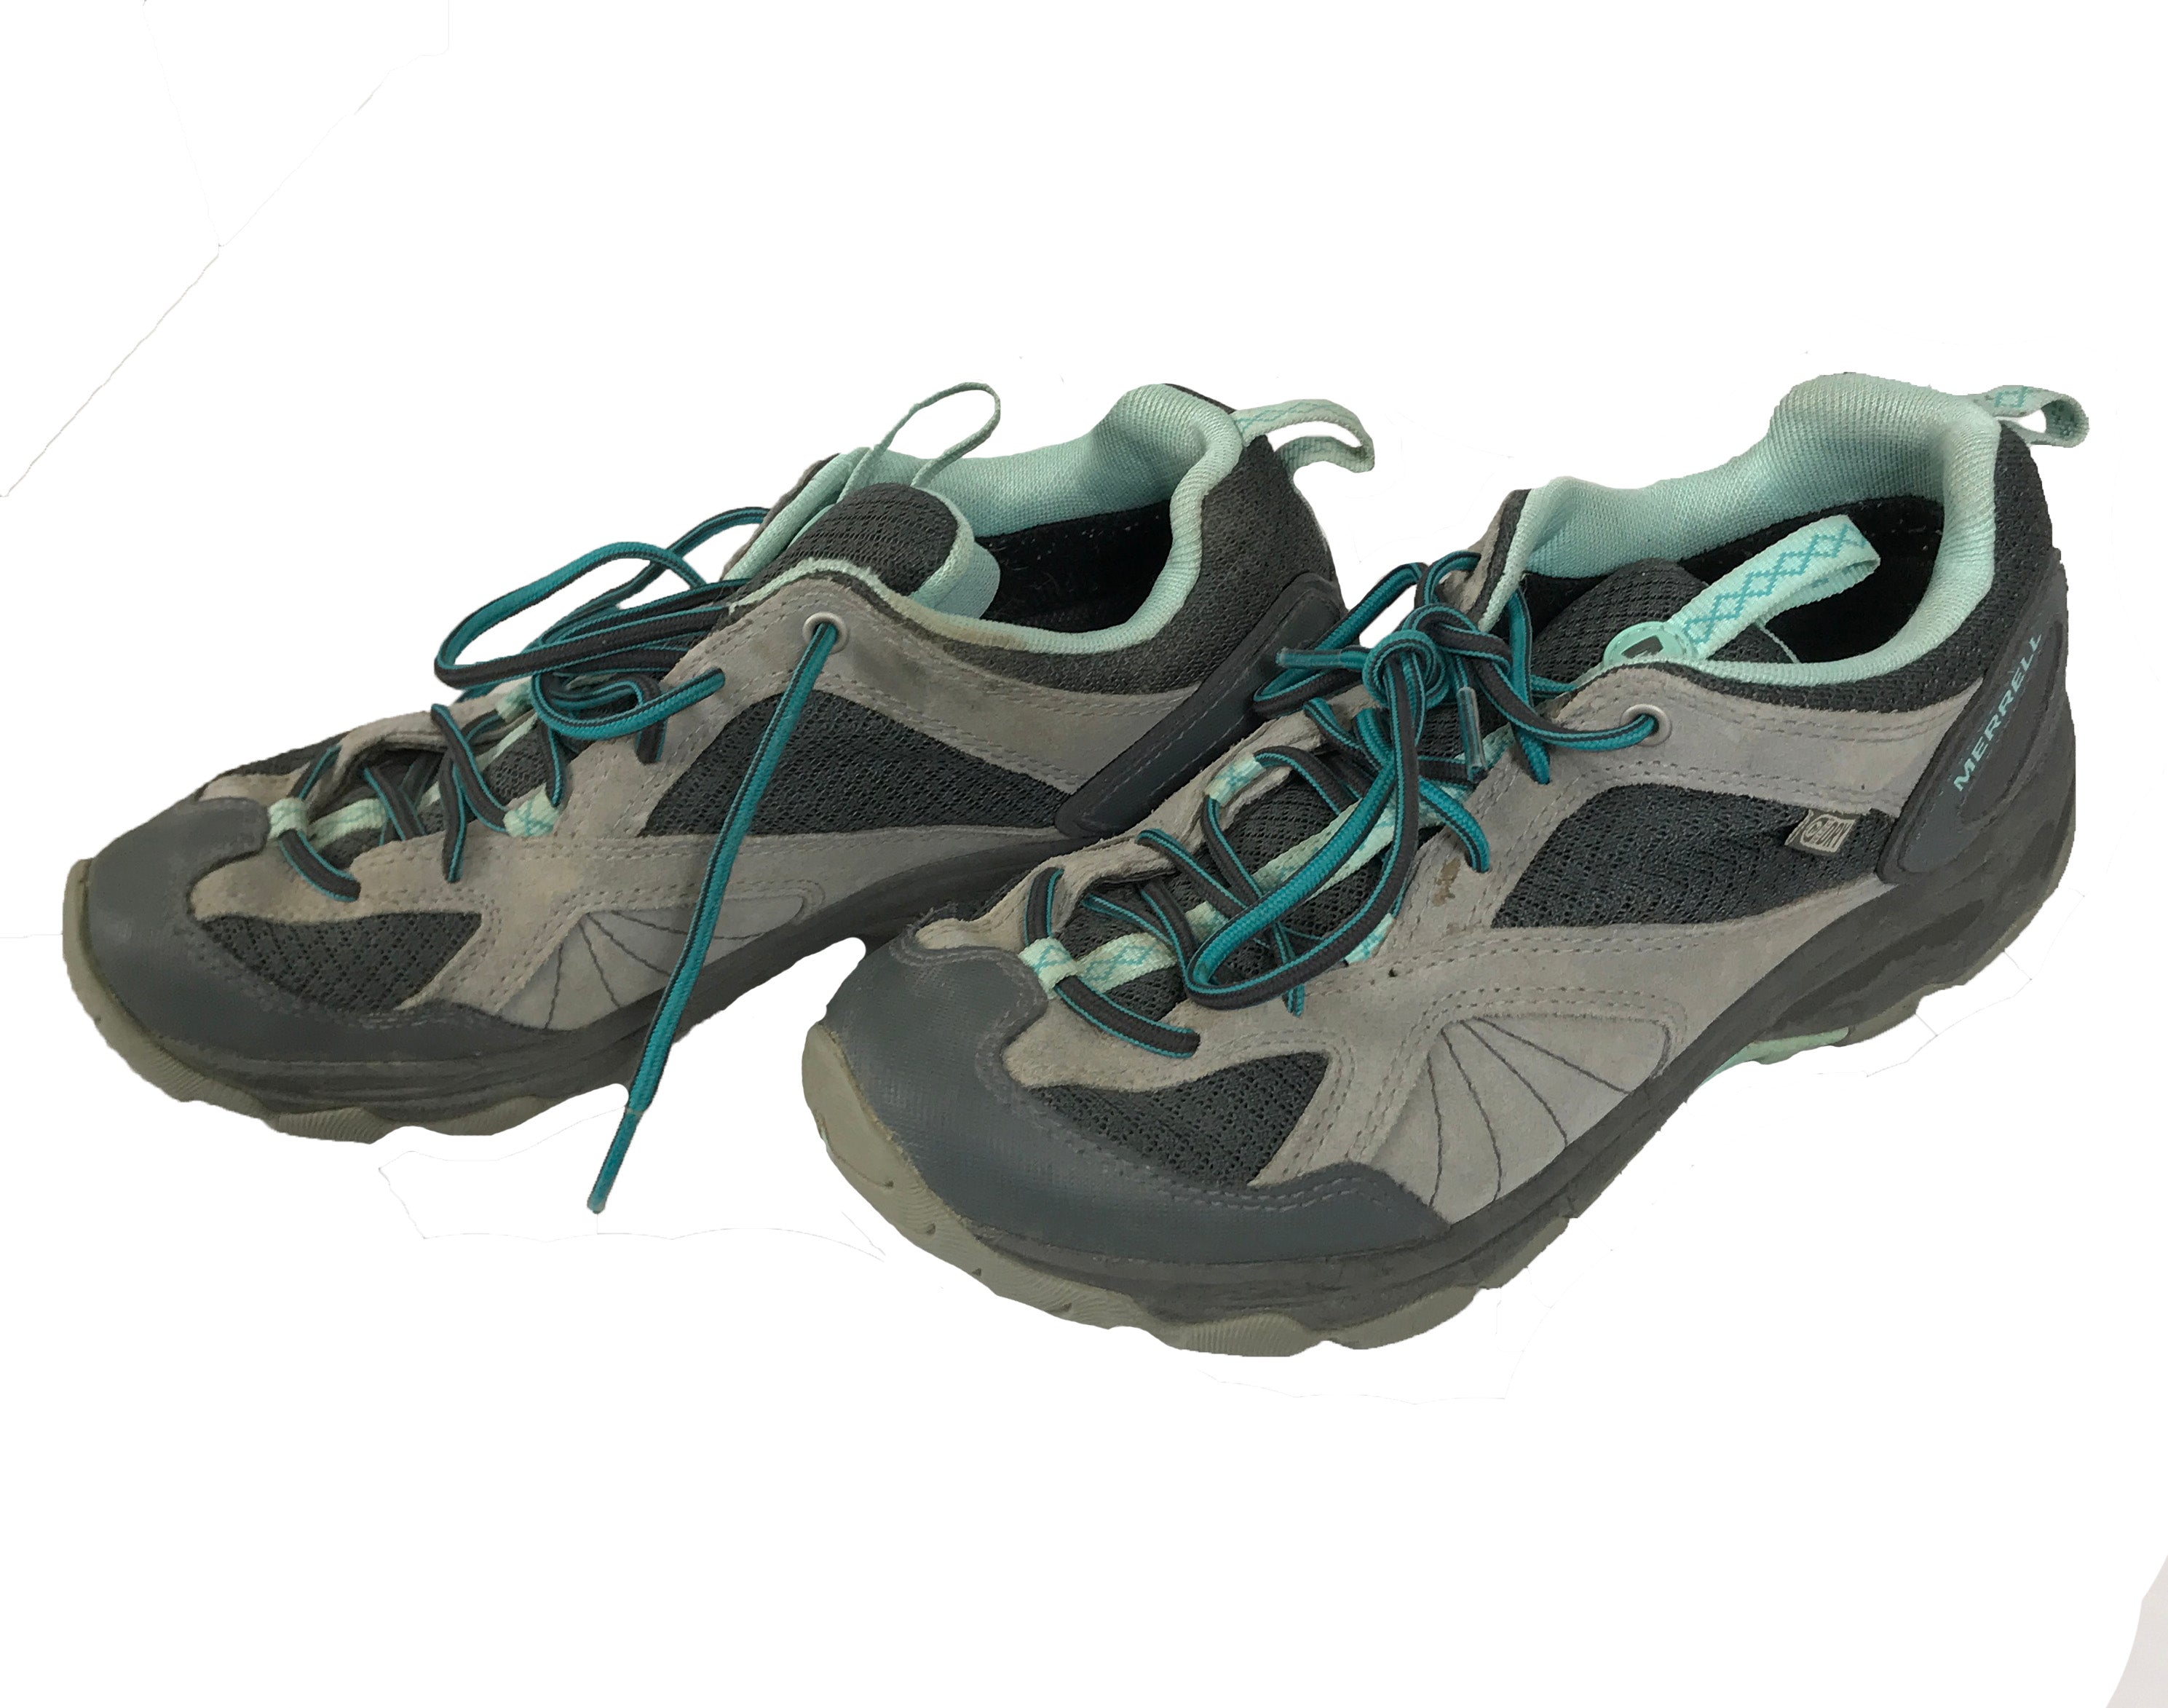 Merrell Blue Hiking Shoes Women's Size 7